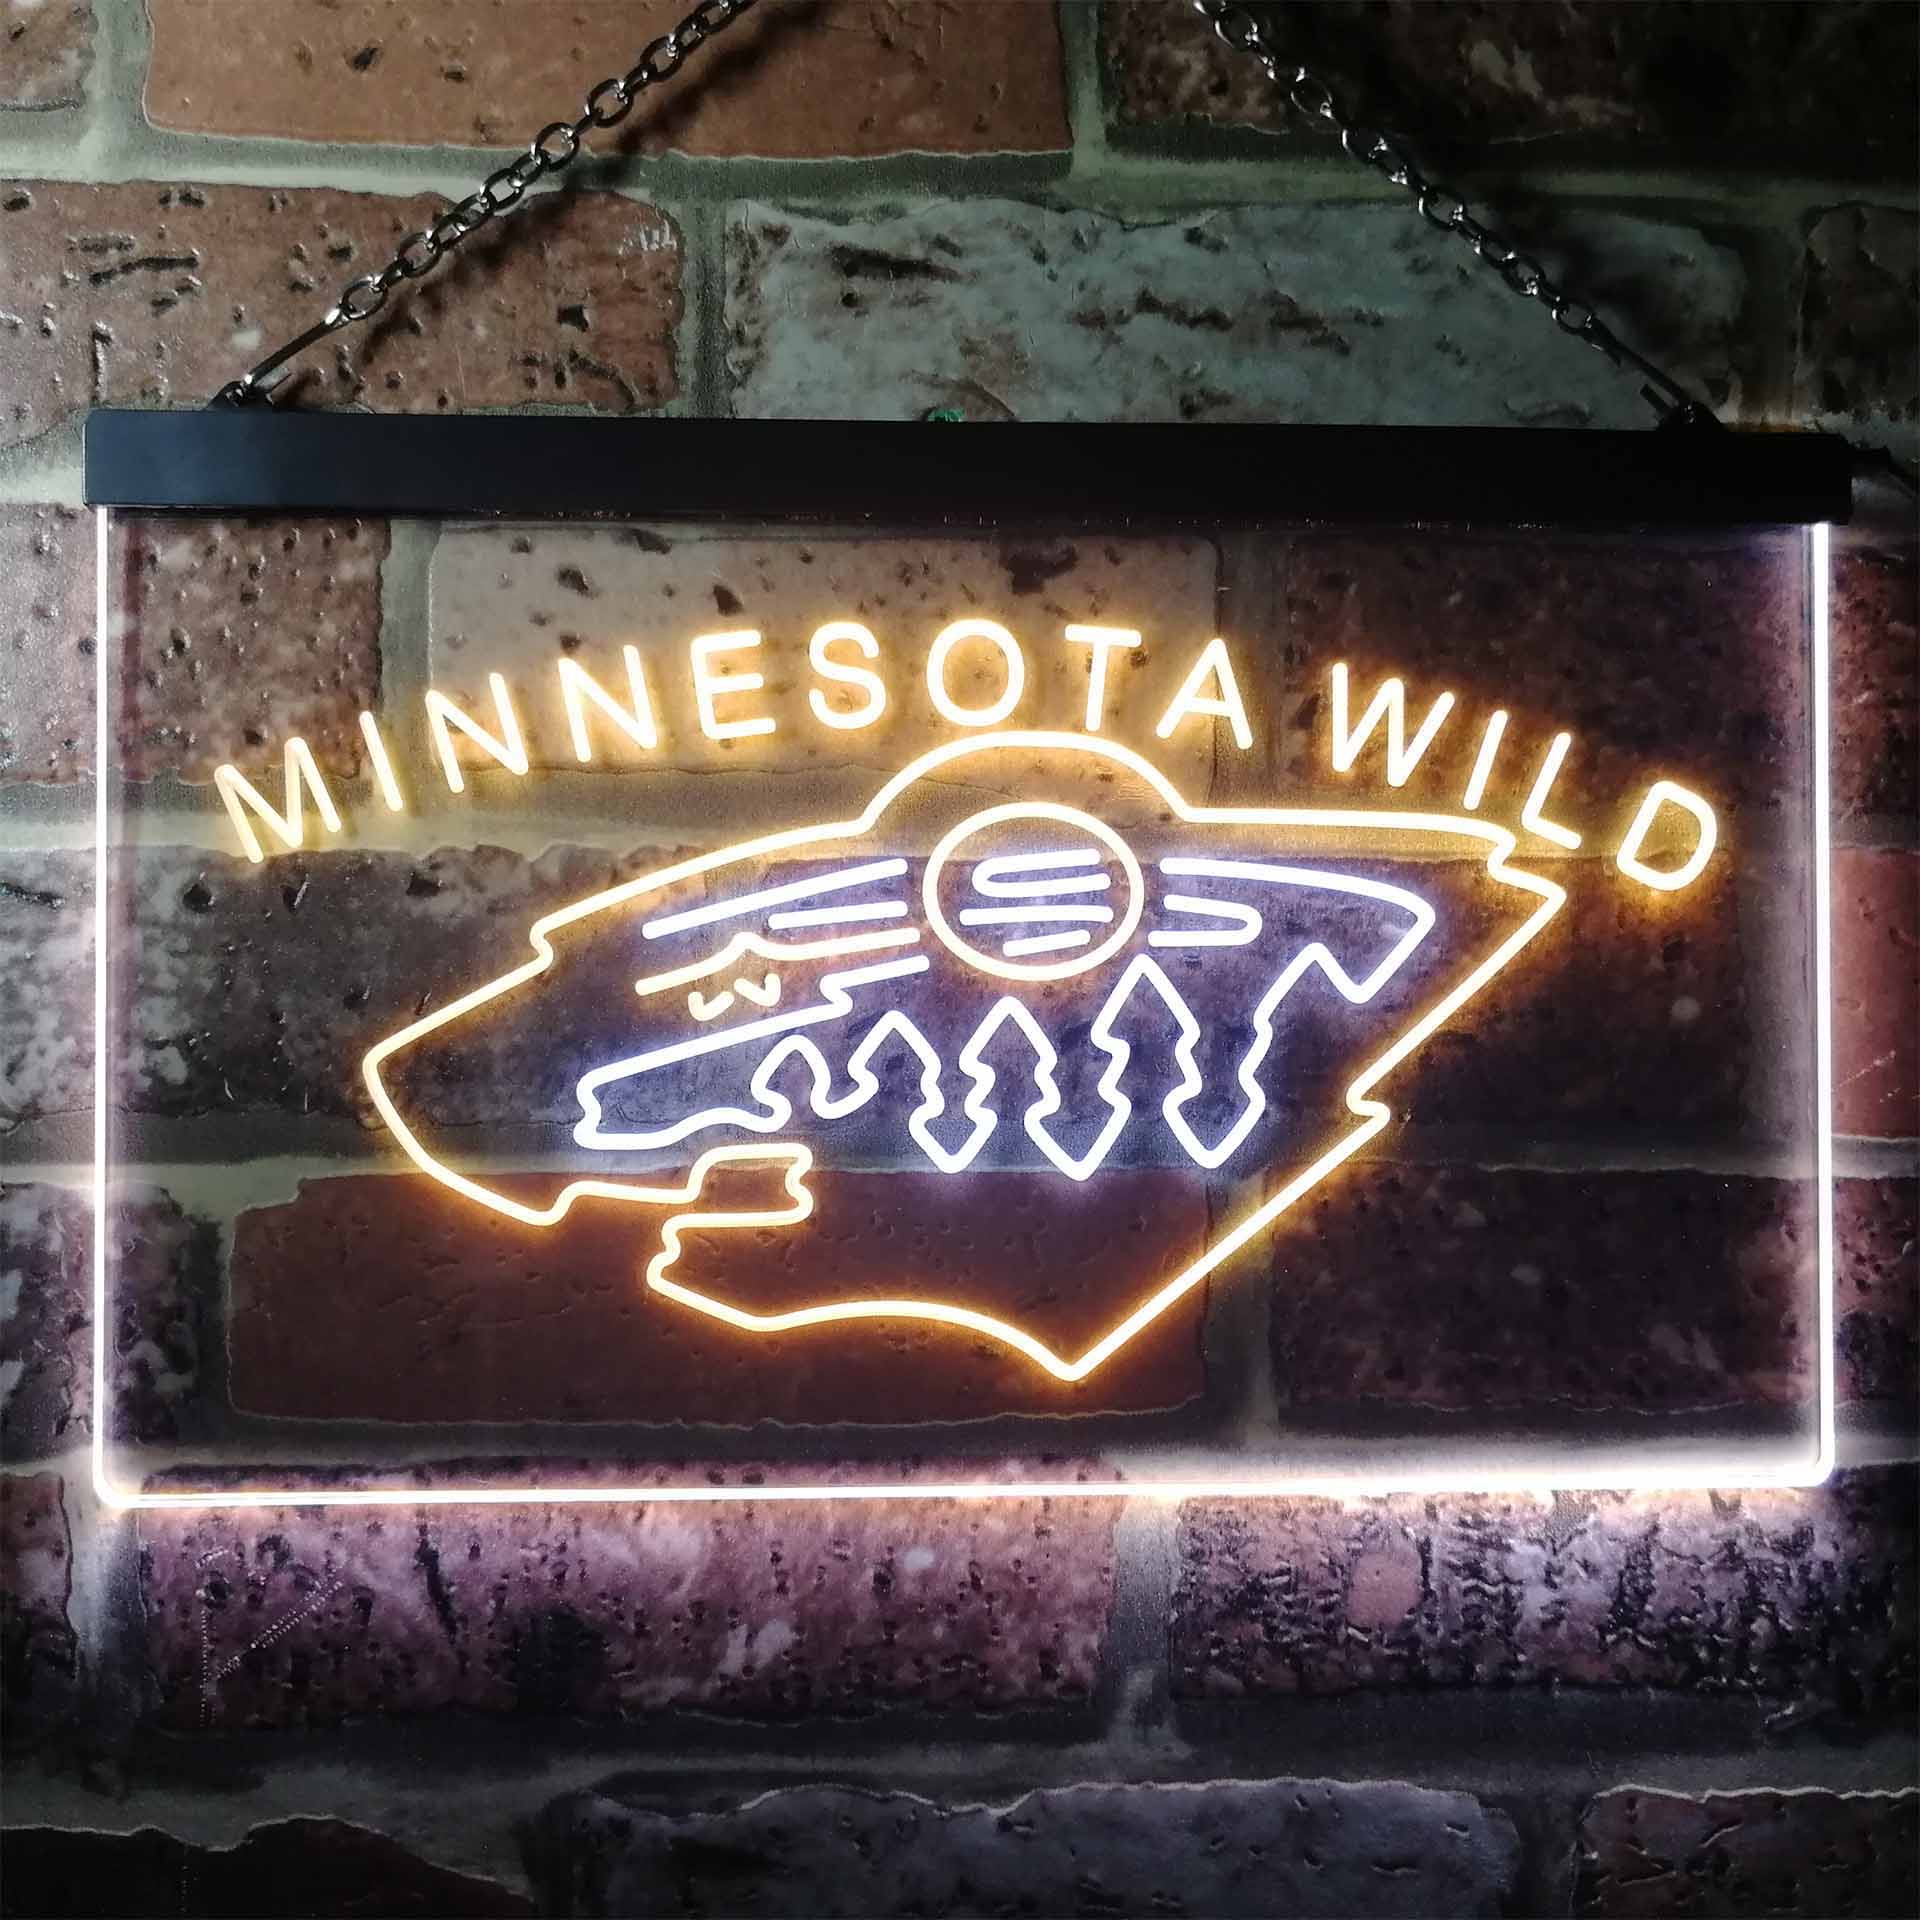 Minnesotas League Wild LED Neon Sign